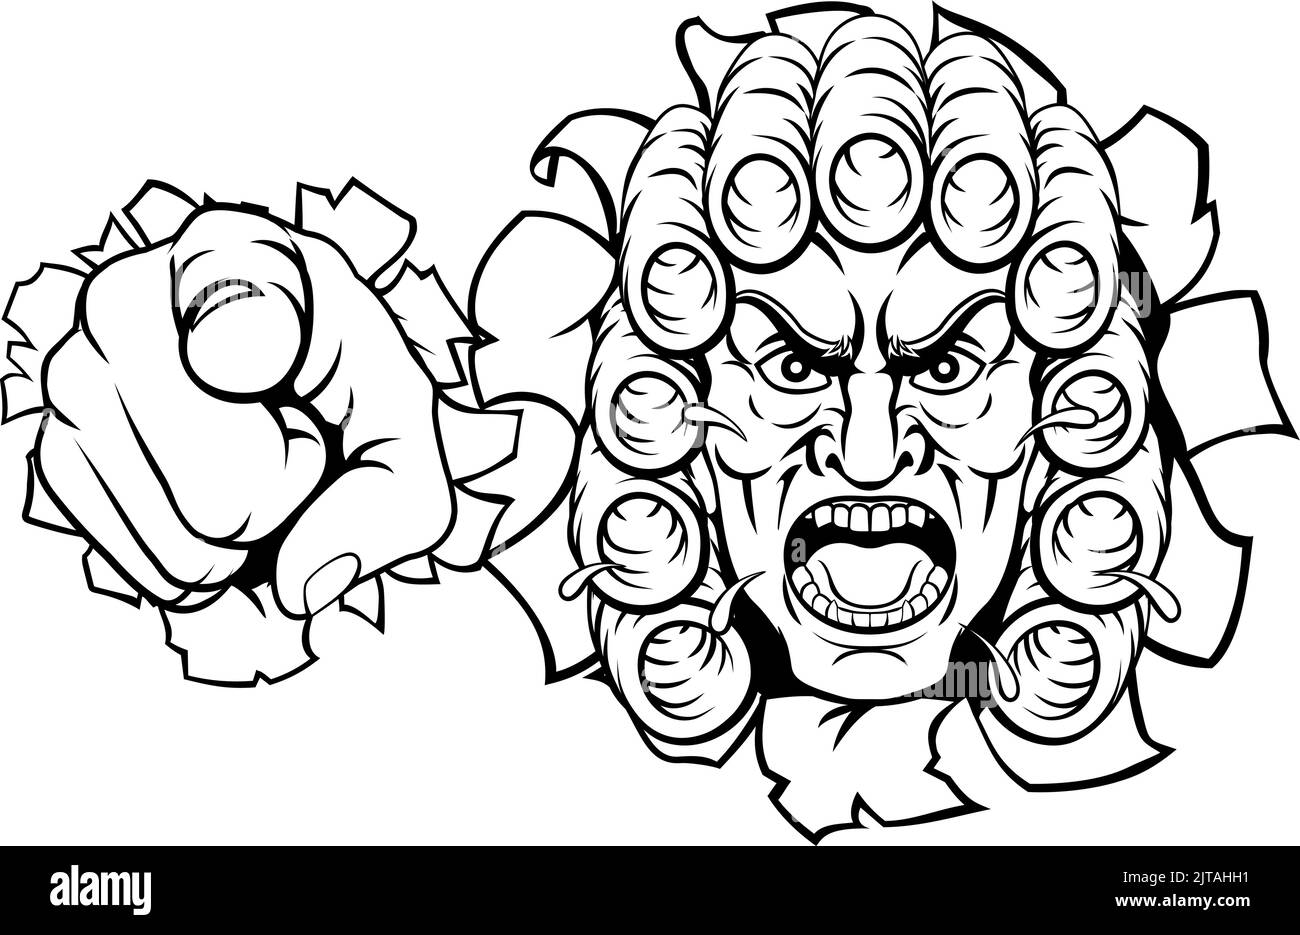 Angry Judge Cartoon Character Stock Vector